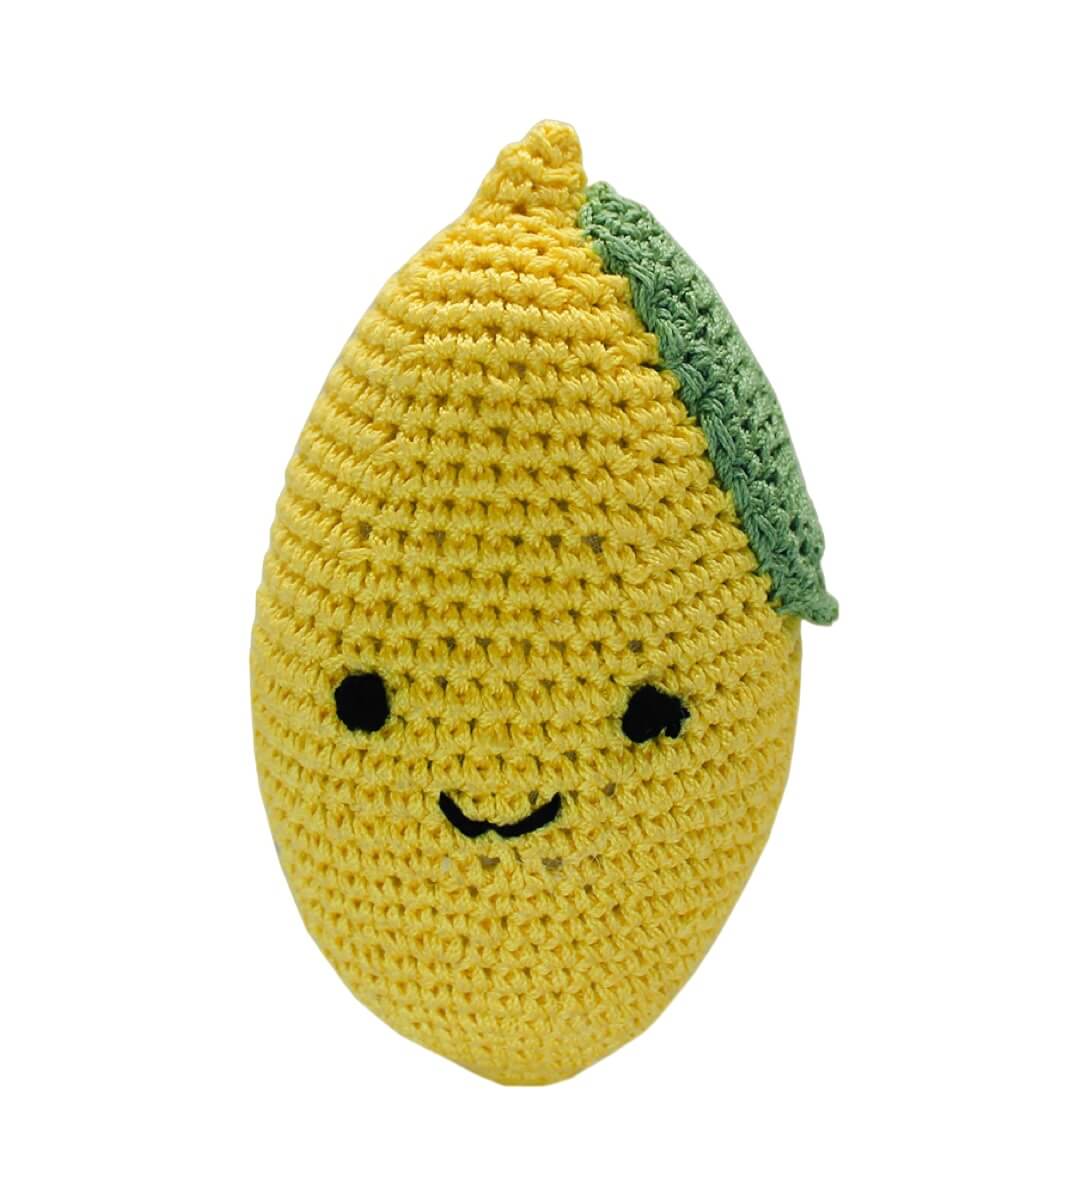 Knit Knacks &quot;Lola Lemon&quot; handmade organic cotton dog toy. Smiling anthropomorphic lemon with an accent leaf.